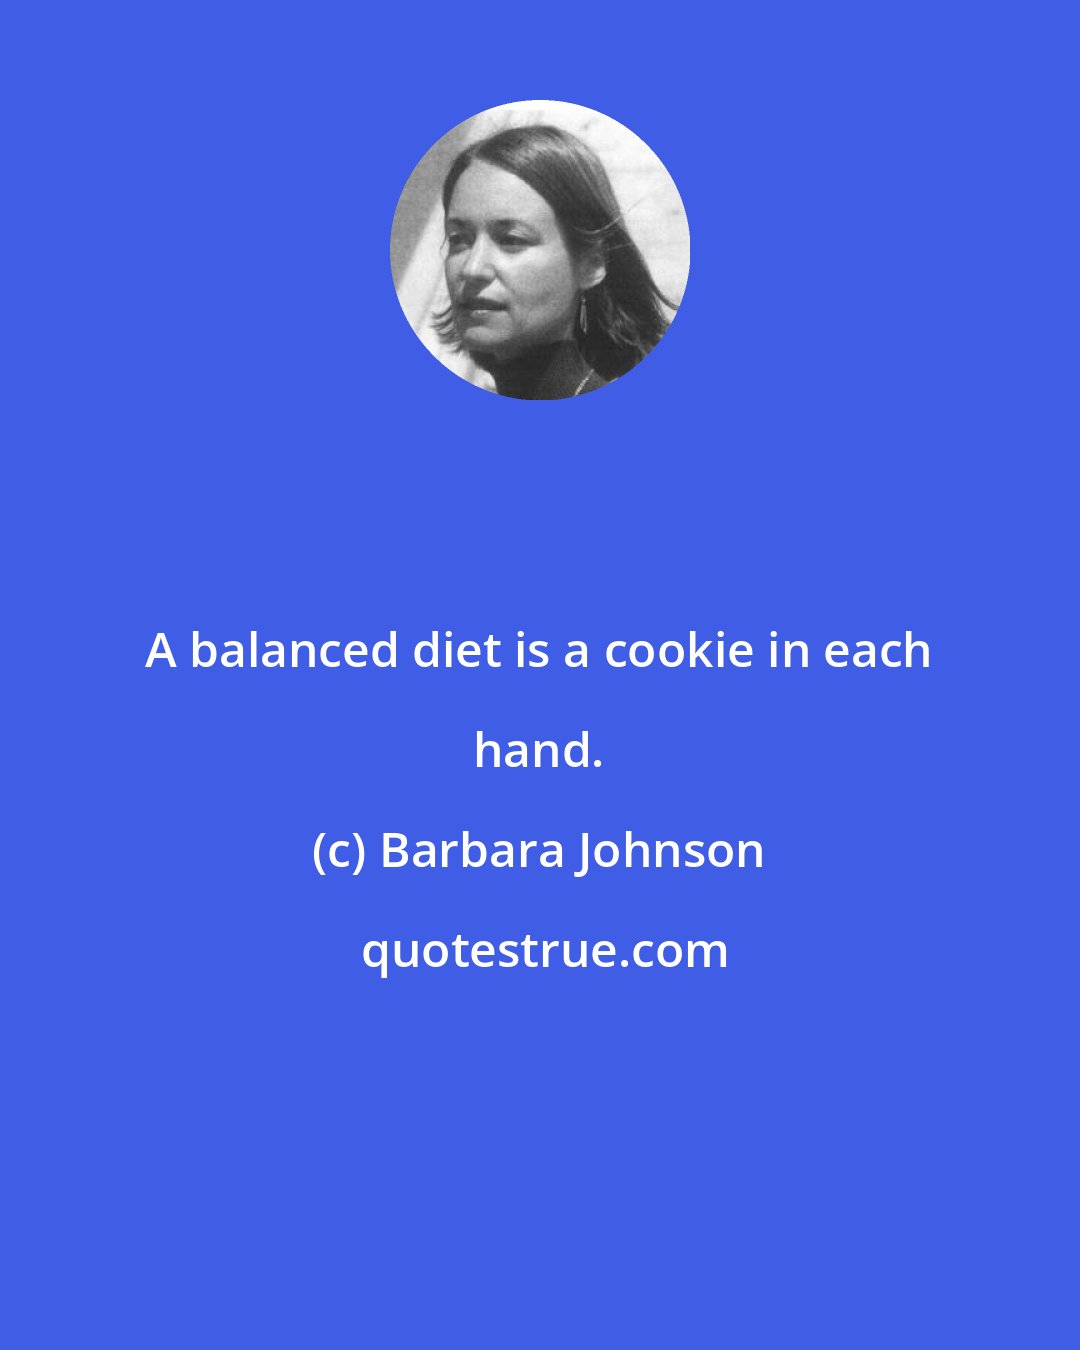 Barbara Johnson: A balanced diet is a cookie in each hand.